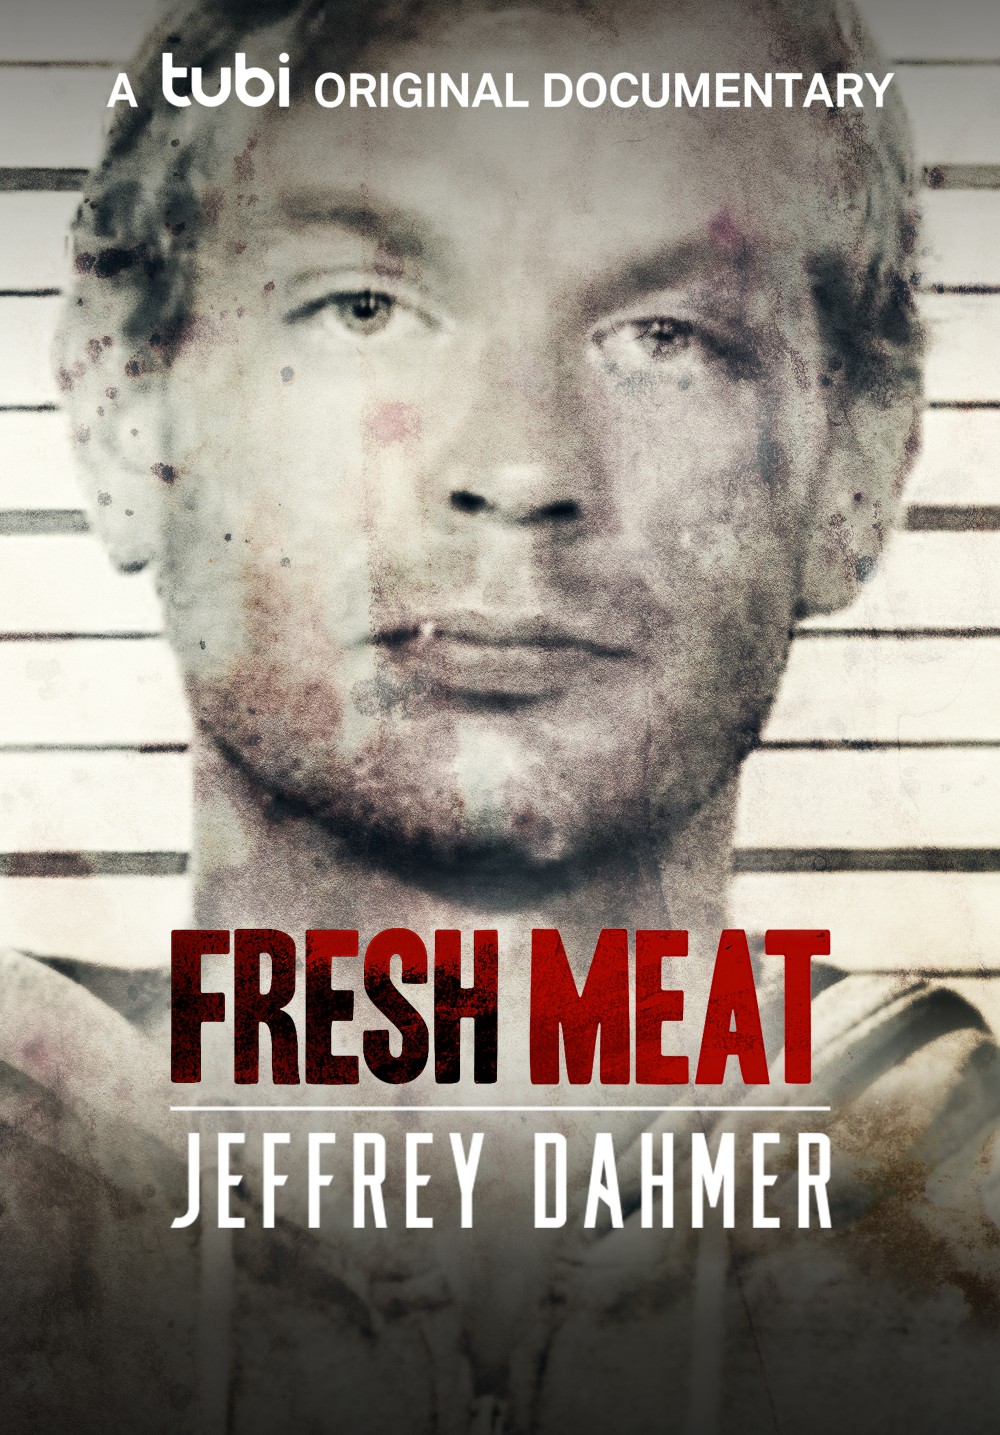 Fresh Meat Jeffrey Dahmer 2021 [720p] (H264) 5e64dfd8b0205cae313bf03683bec49d